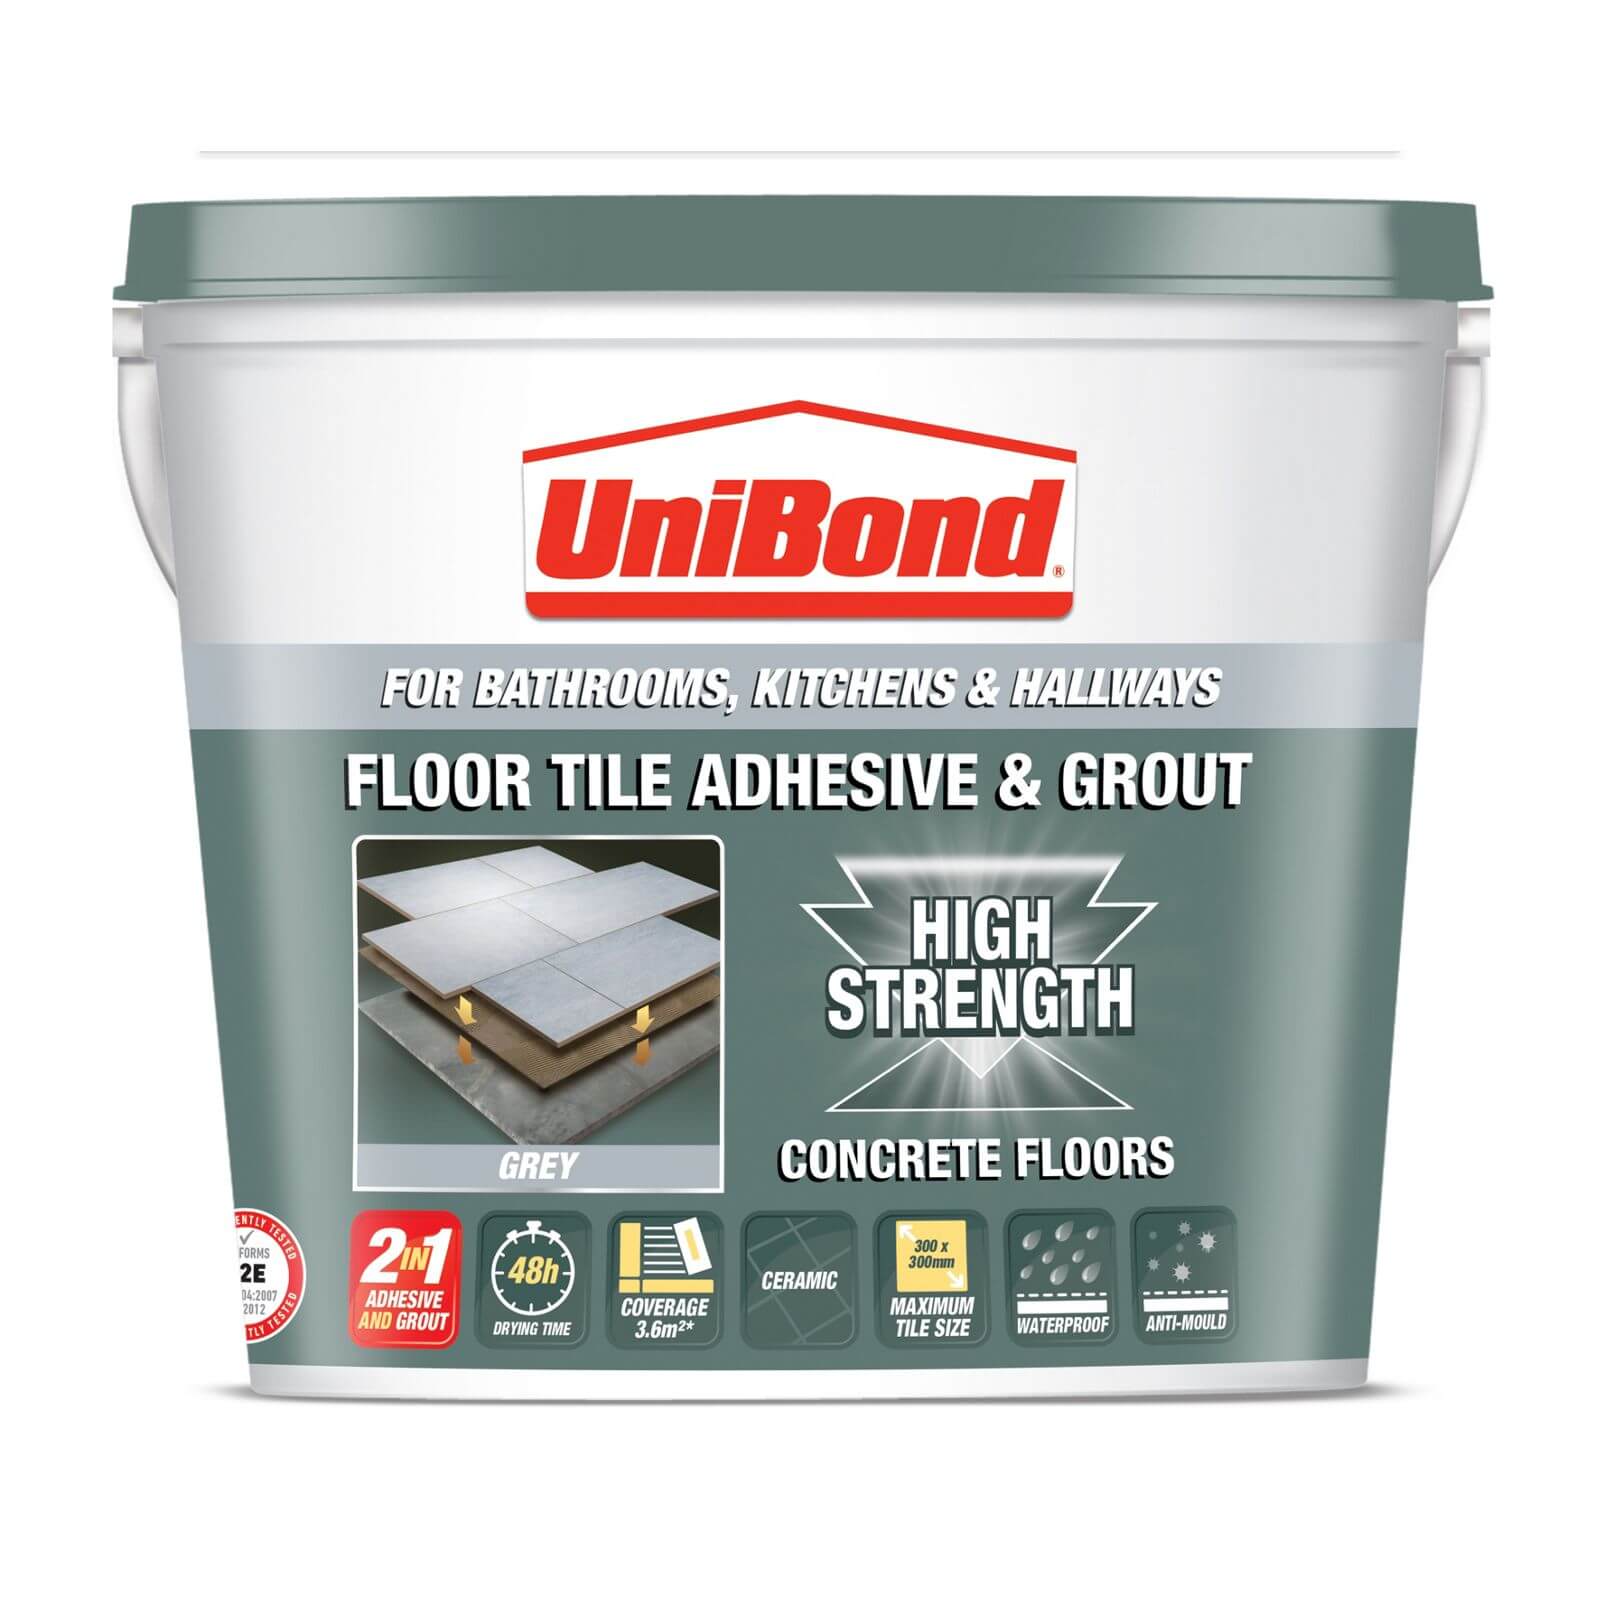 Unibond Ceramic Floor Tile Adhesive & Grout - Grey